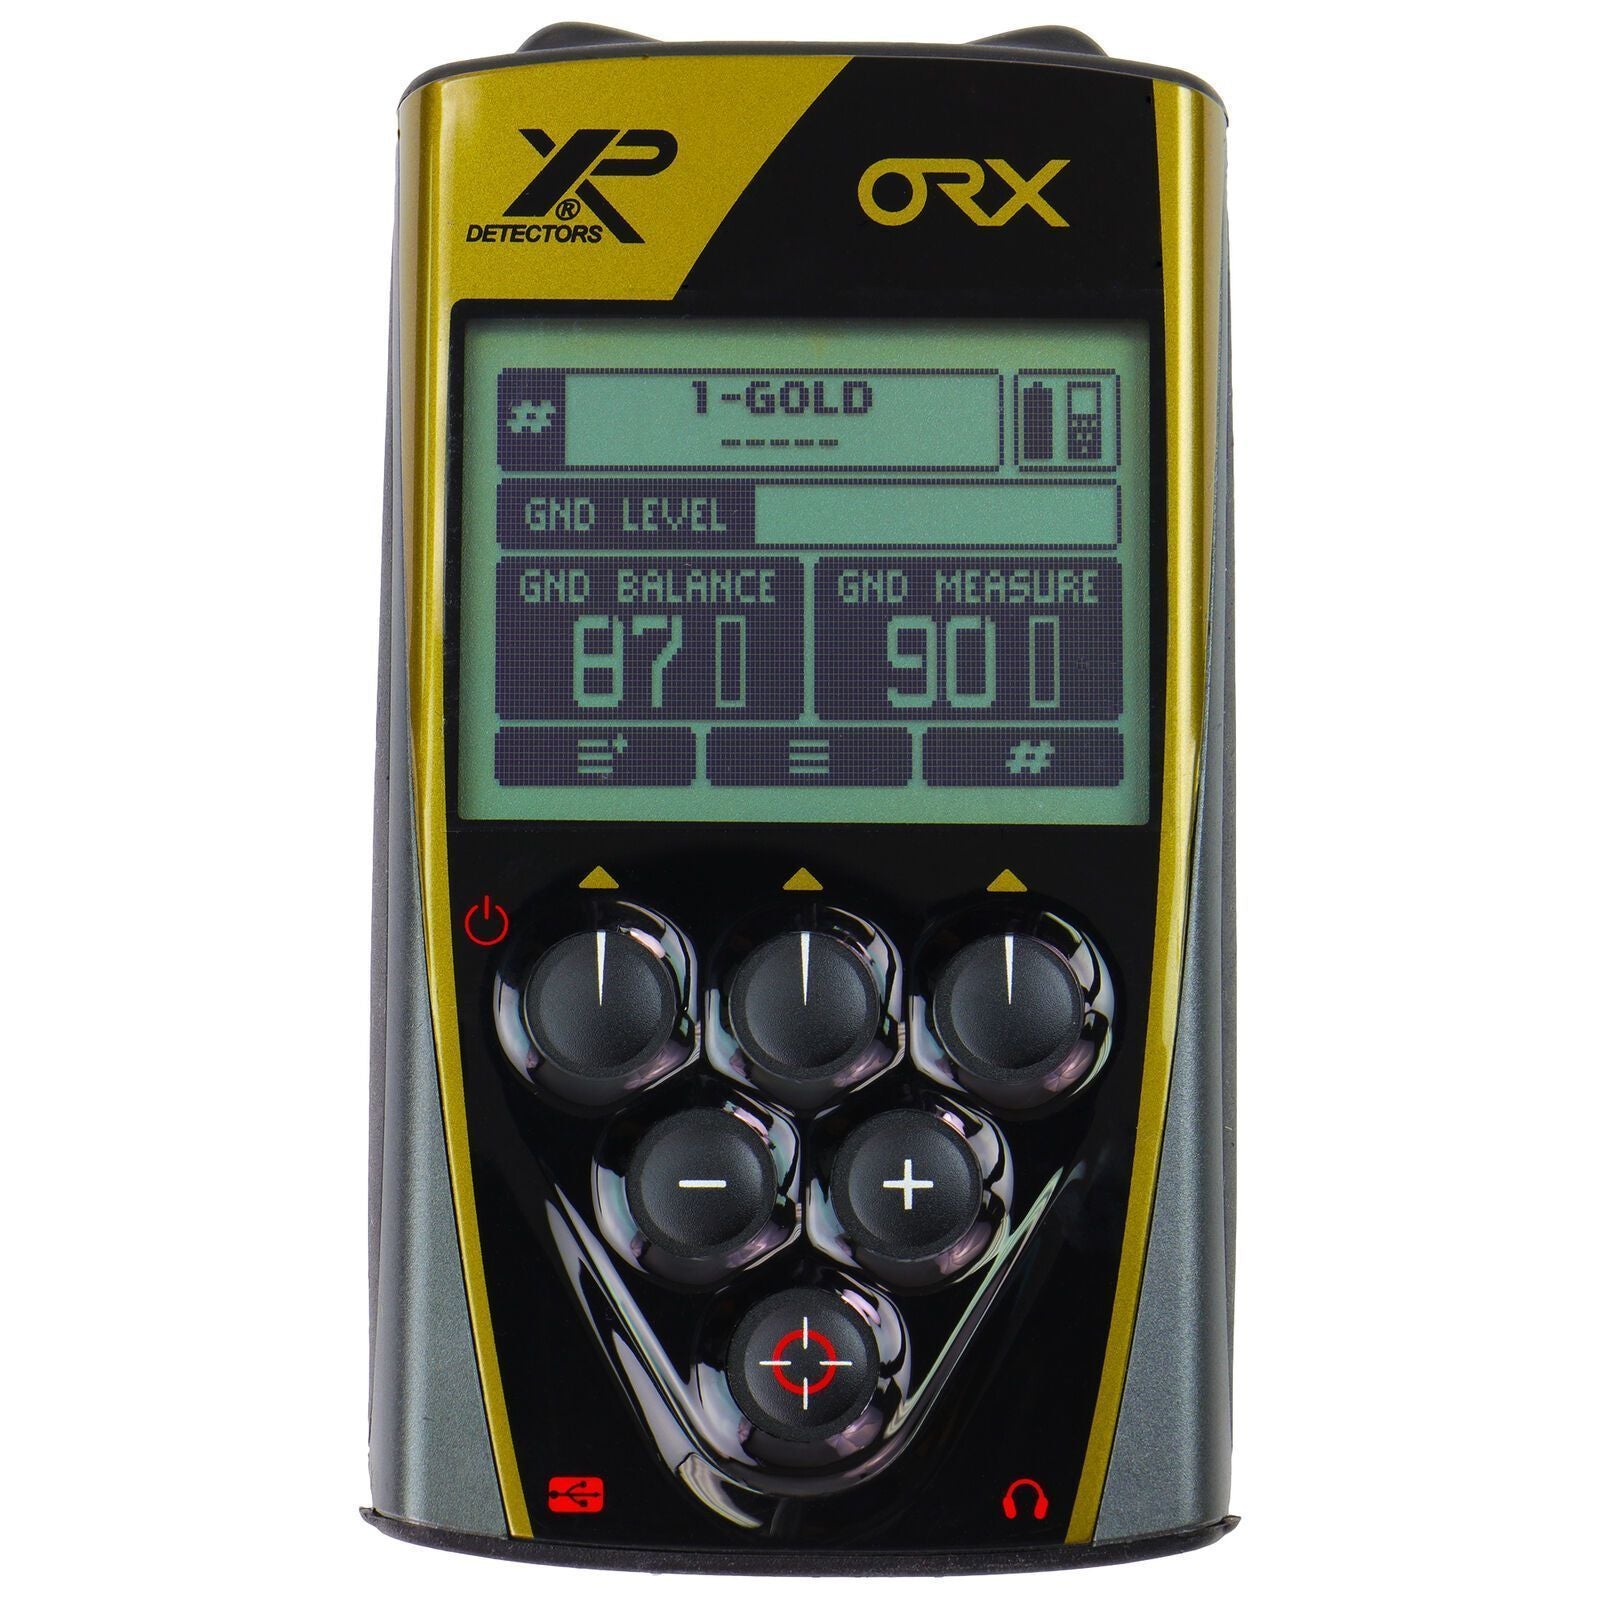 XP ORX Metal Detector 9" Round Coil & RC-Destination Gold Detectors